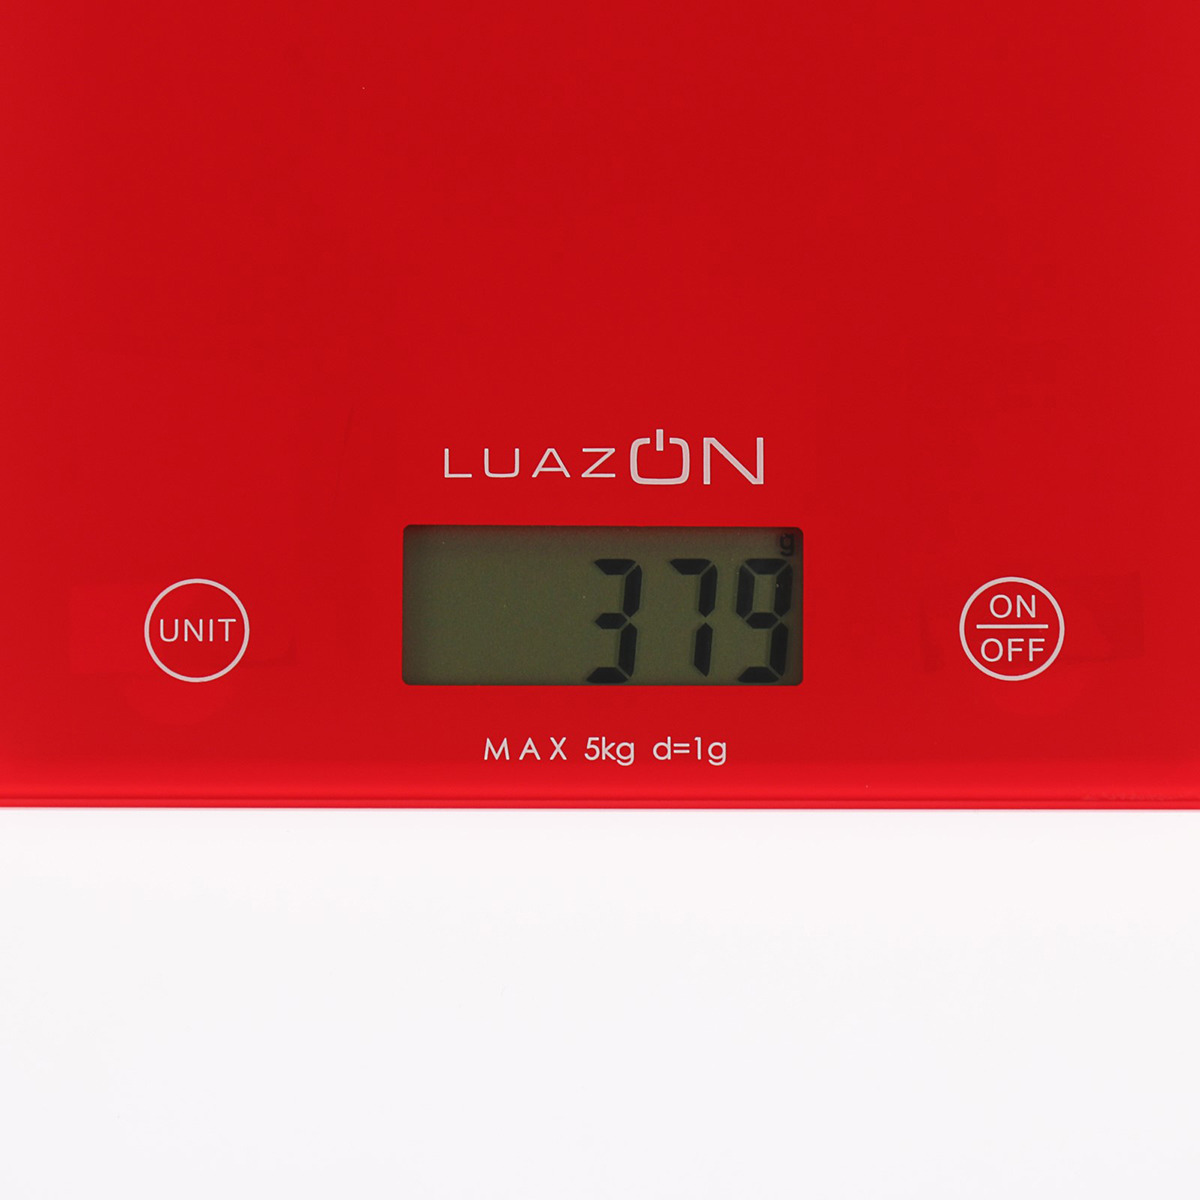 Весы кухонные red. Весы электронные кухонные Luazon LVK-702. Весы кухонные электронные до 5 кг красные. Elle Home весы. Gxd3pnlb101a Libra Electronics.